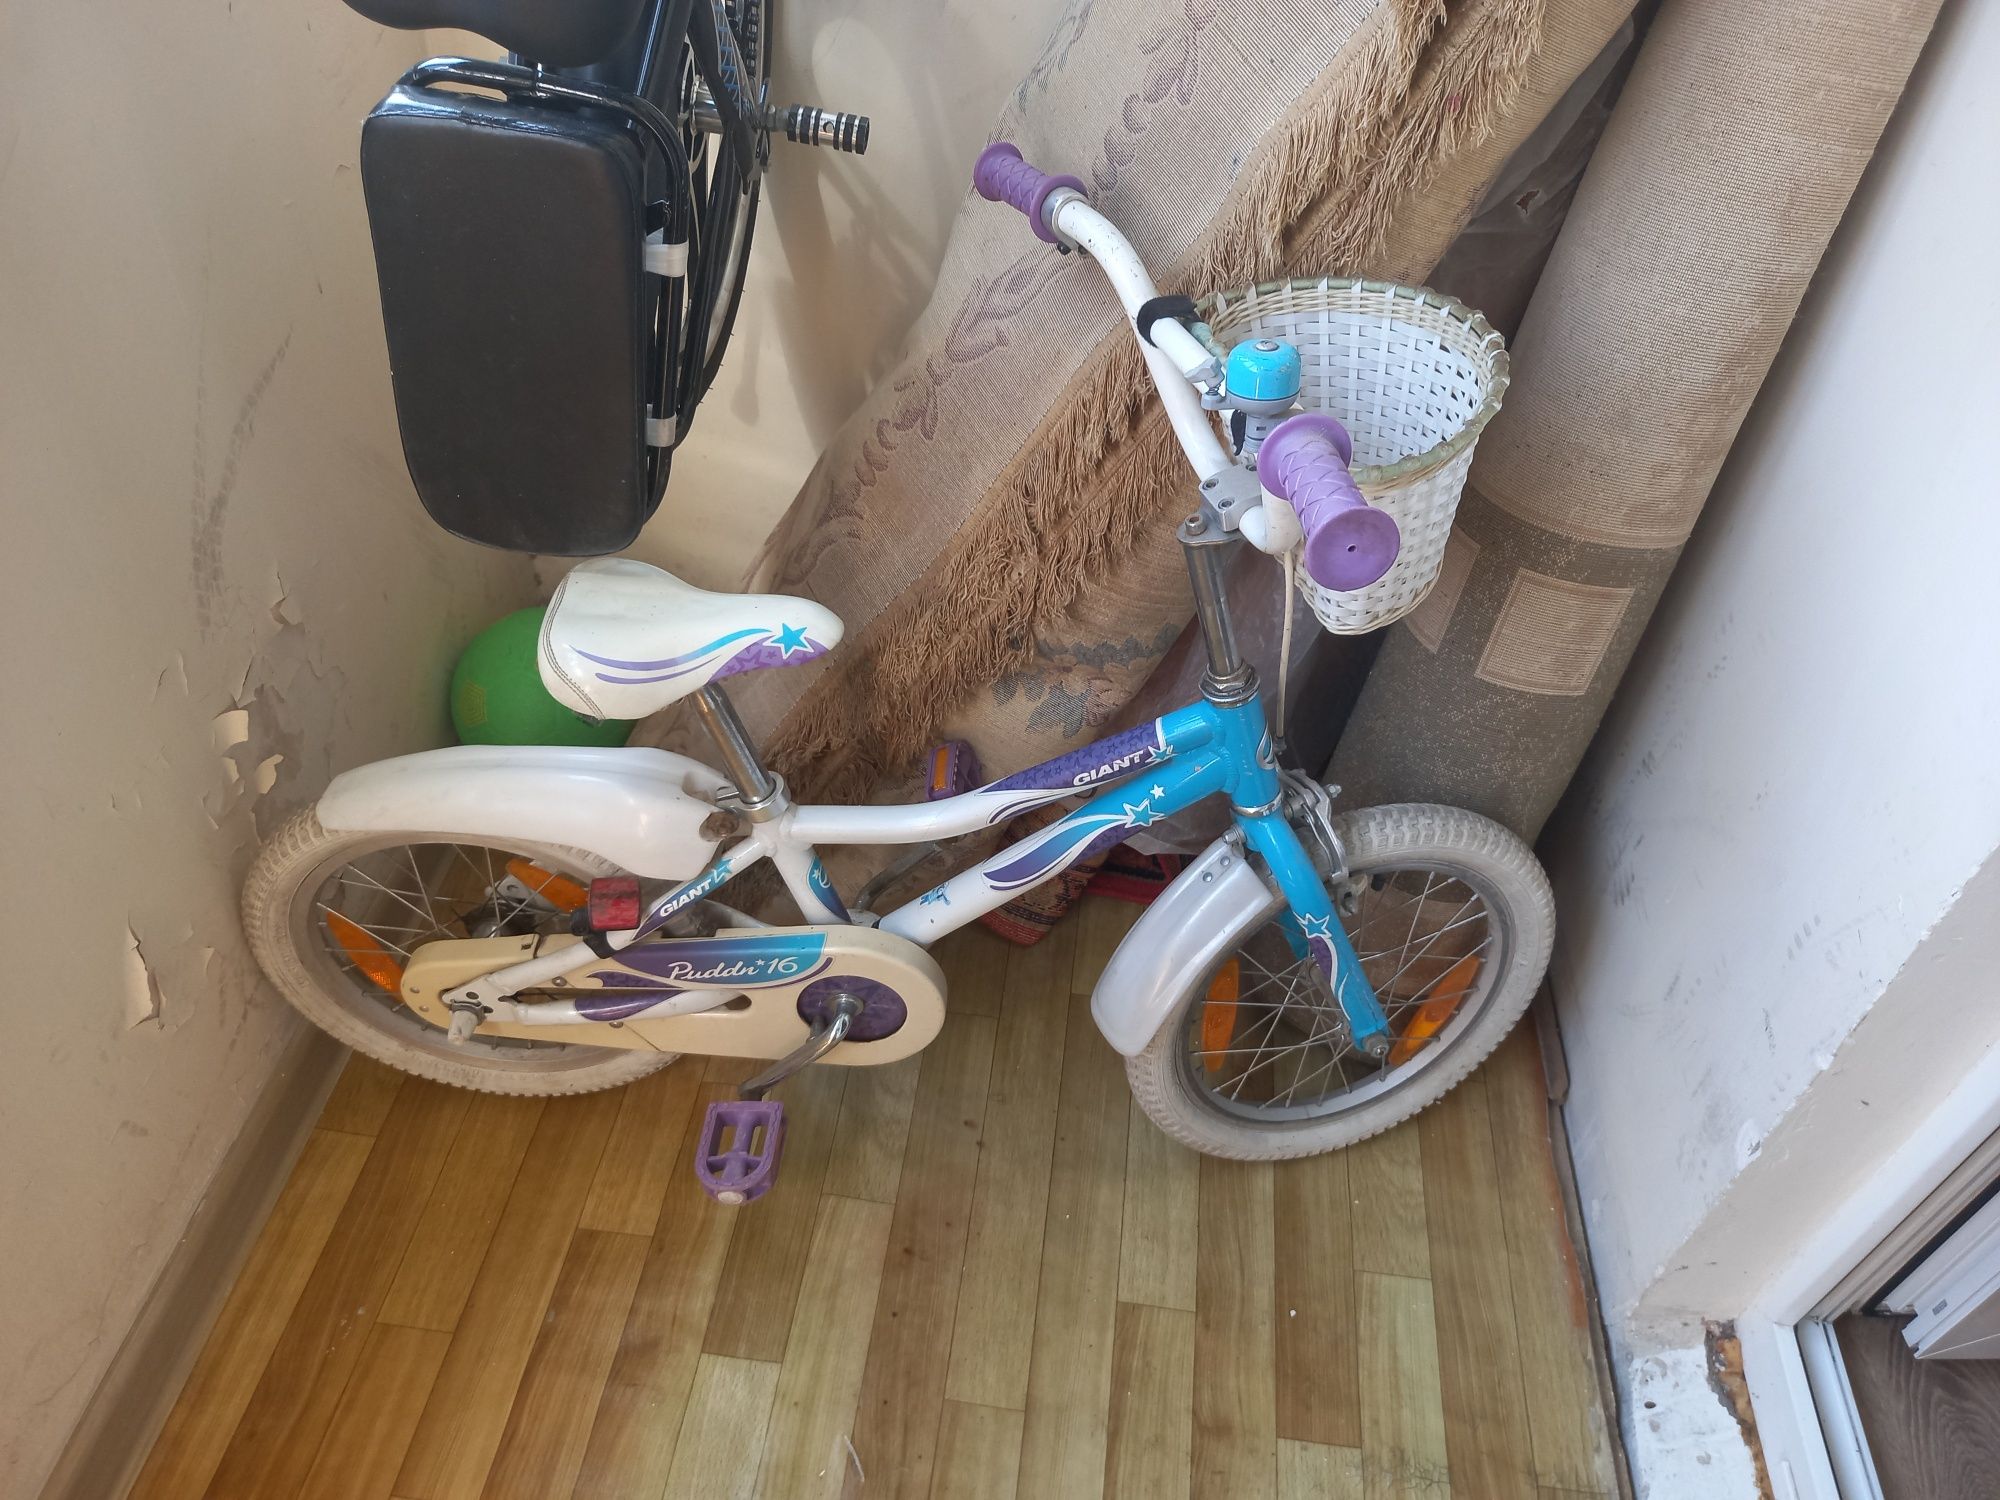 Велосипед детский giant Puddin 16